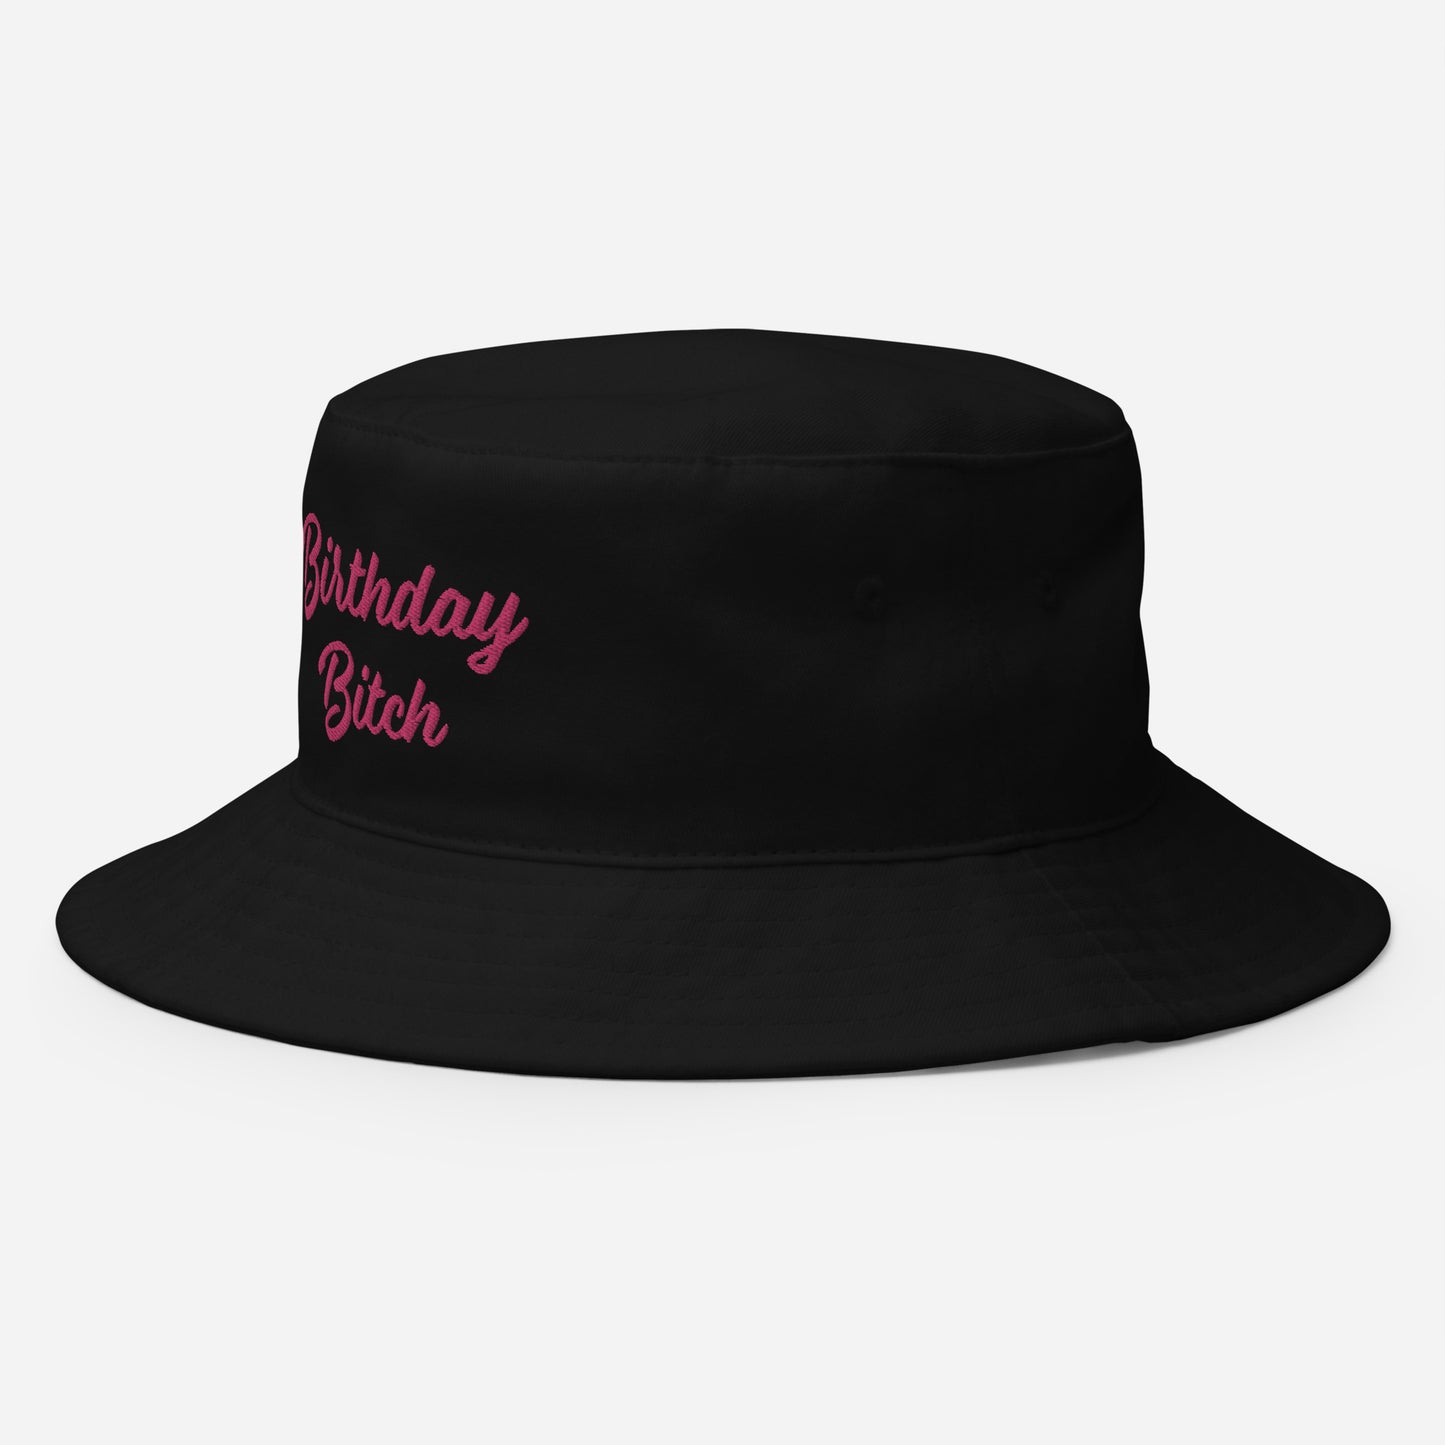 Birthday Bitch | Bucket Hat